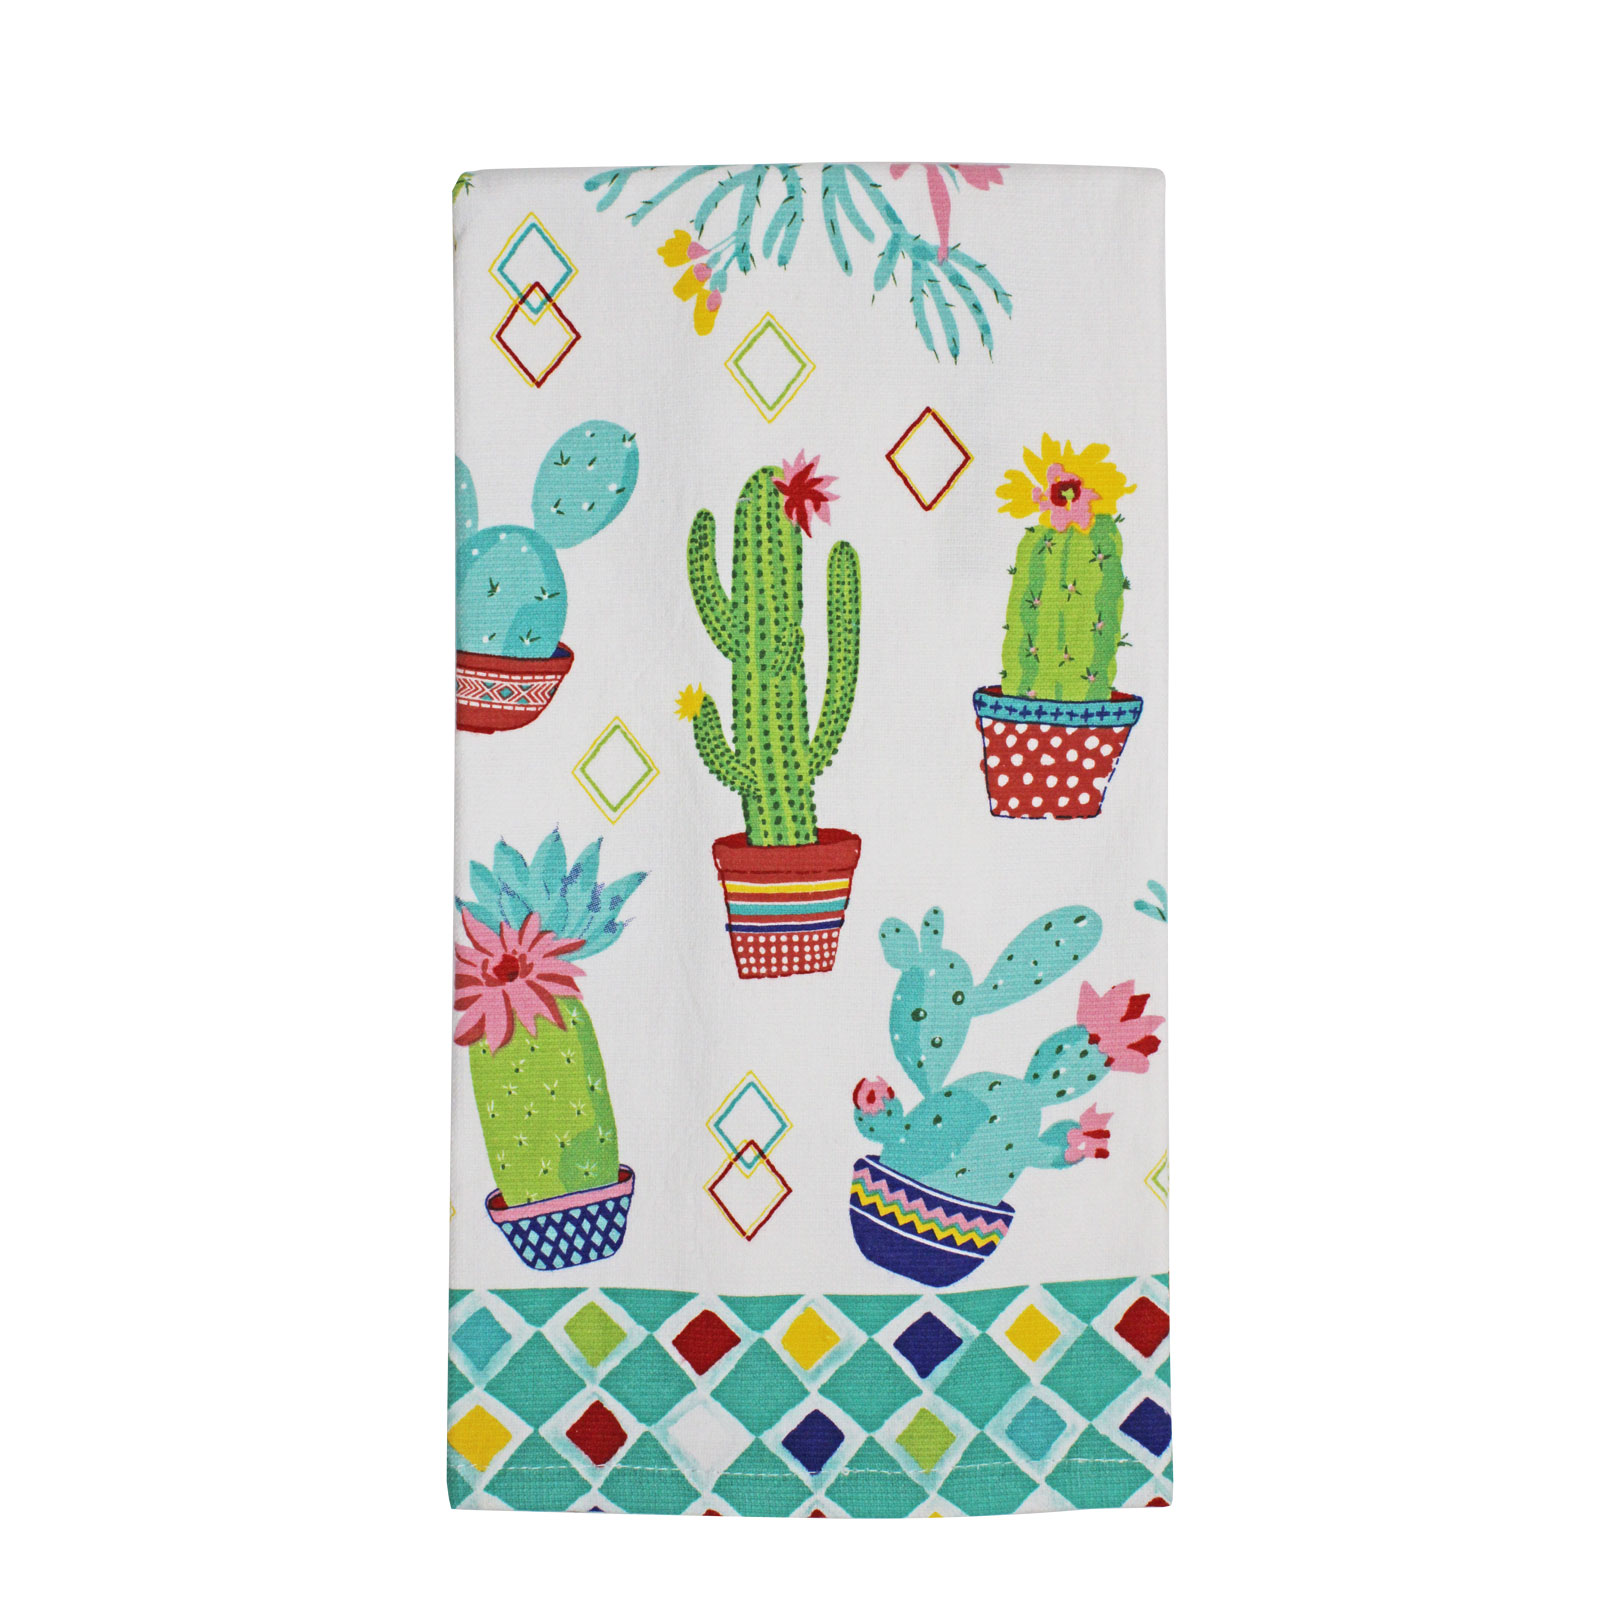 3 Cactus and Longhorn Towel 